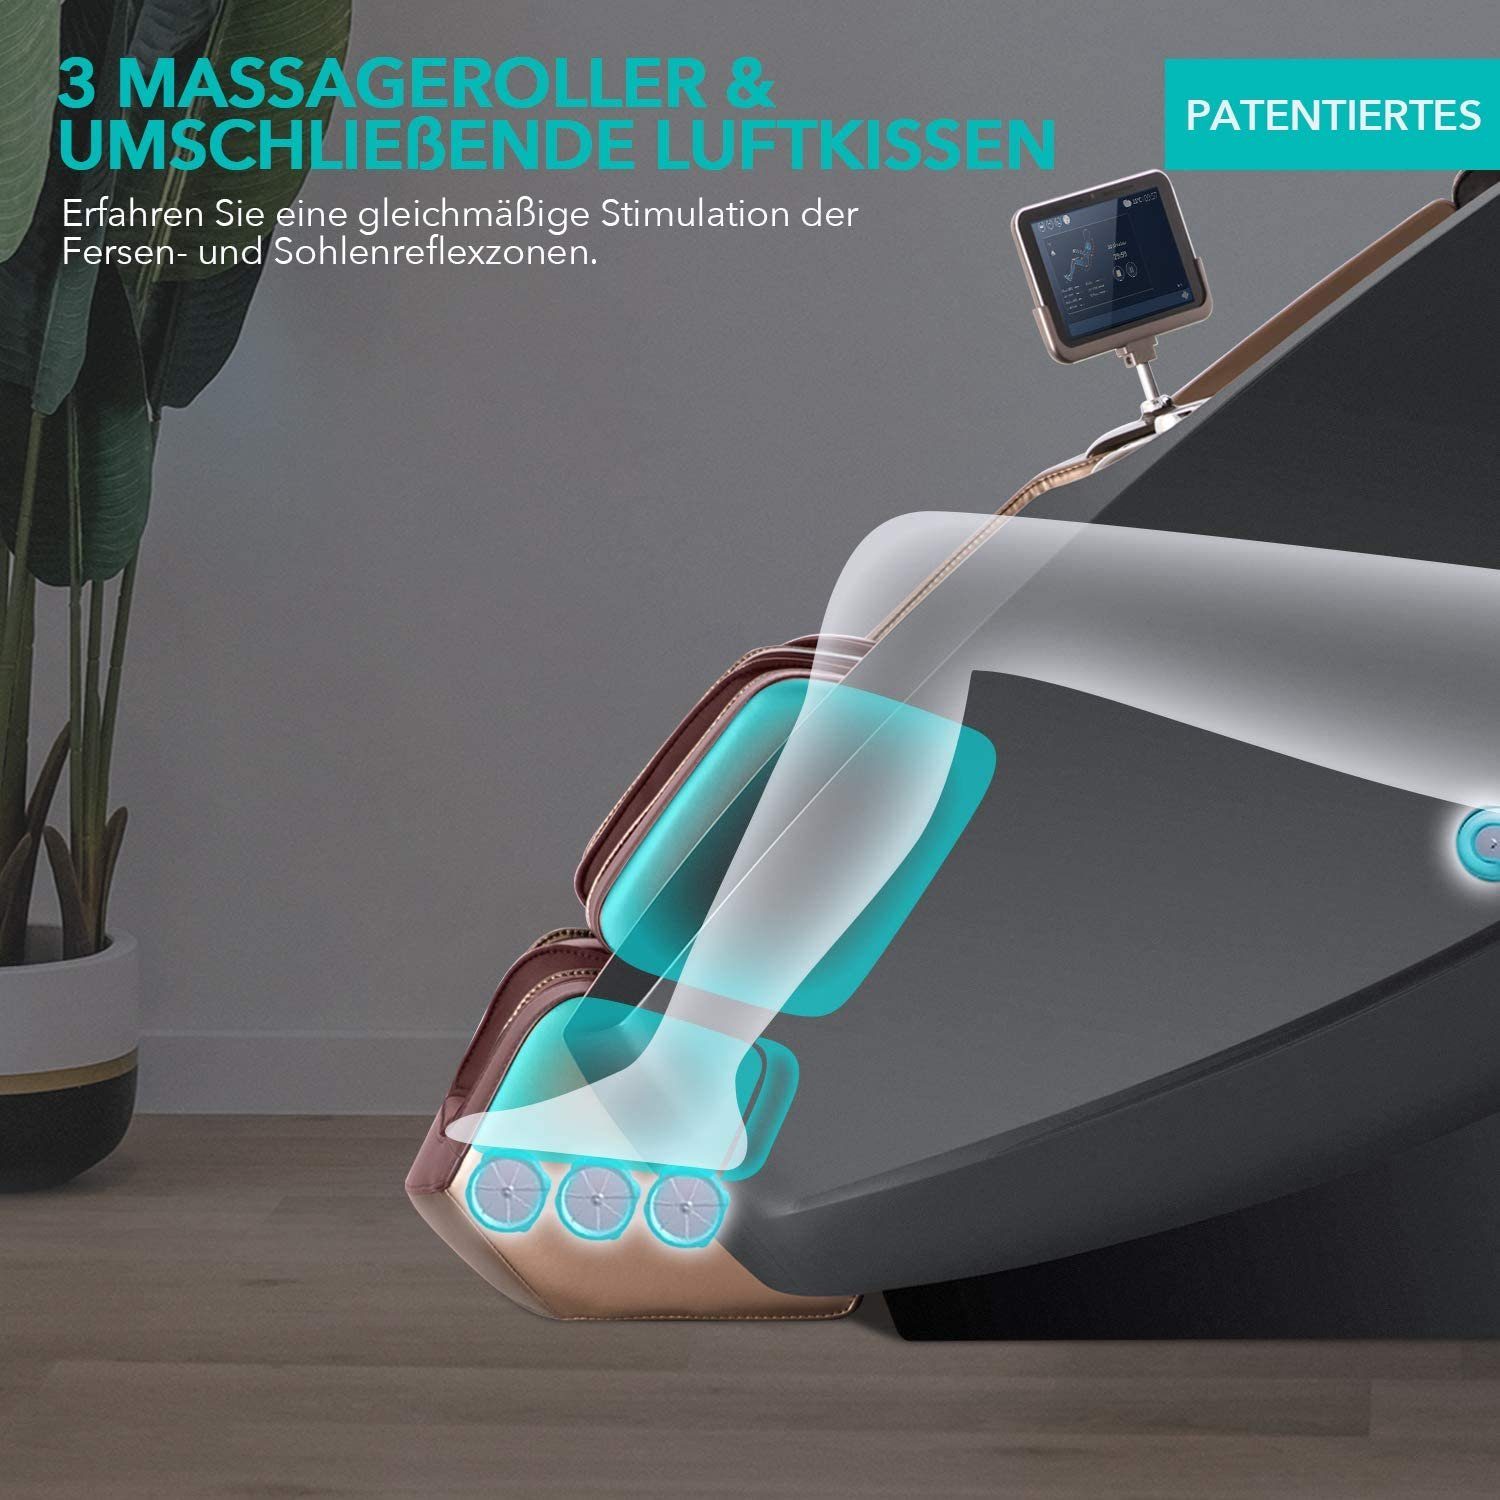 3D High-End GRAU-ROT Tablet, Massagesessel, NAIPO Raumkapsel-Design mit Massagestuhl